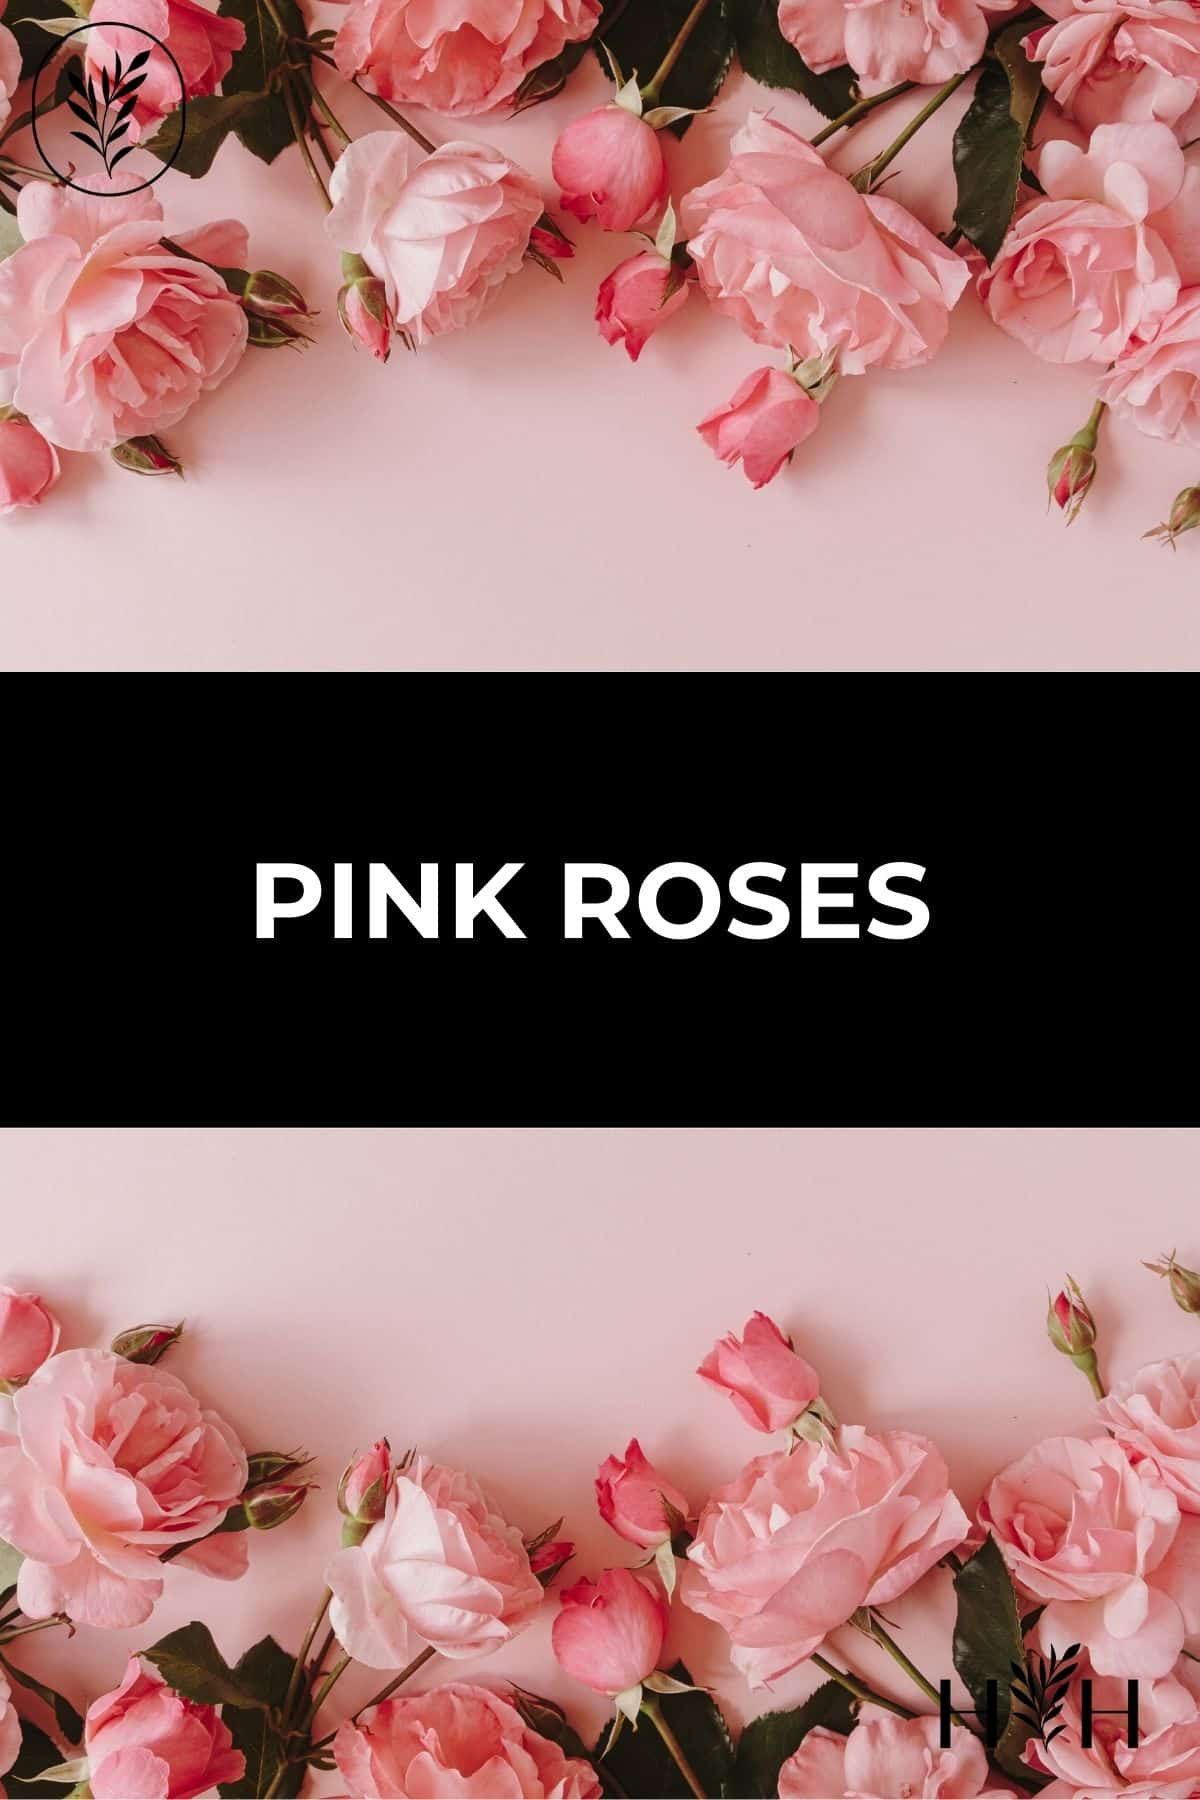 Pink roses via @home4theharvest